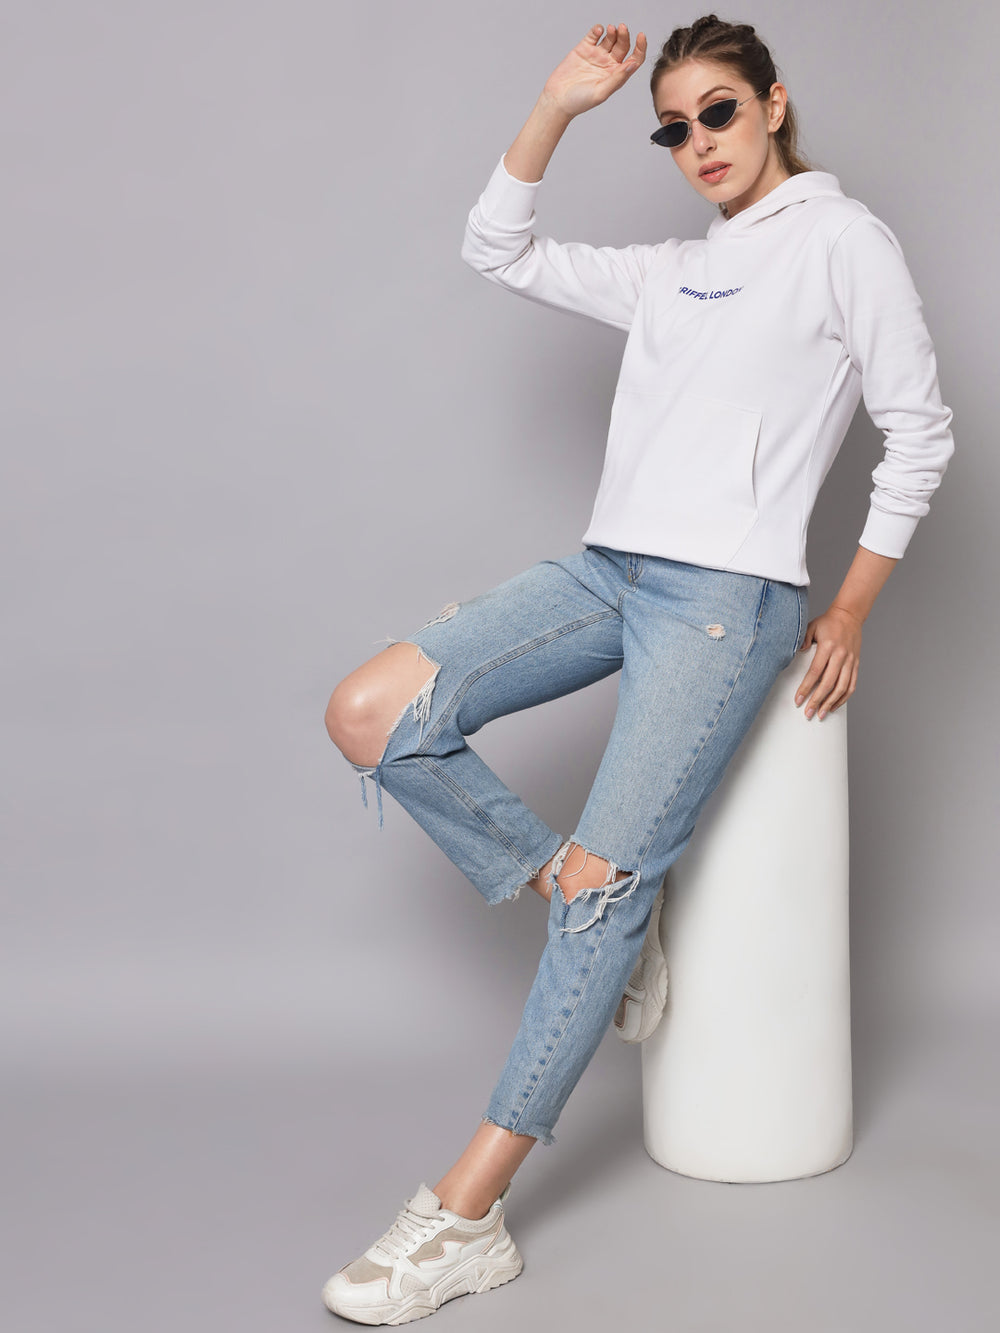 Griffel Women’s Cotton Fleece Full Sleeve White Hoodie Sweatshirt - griffel